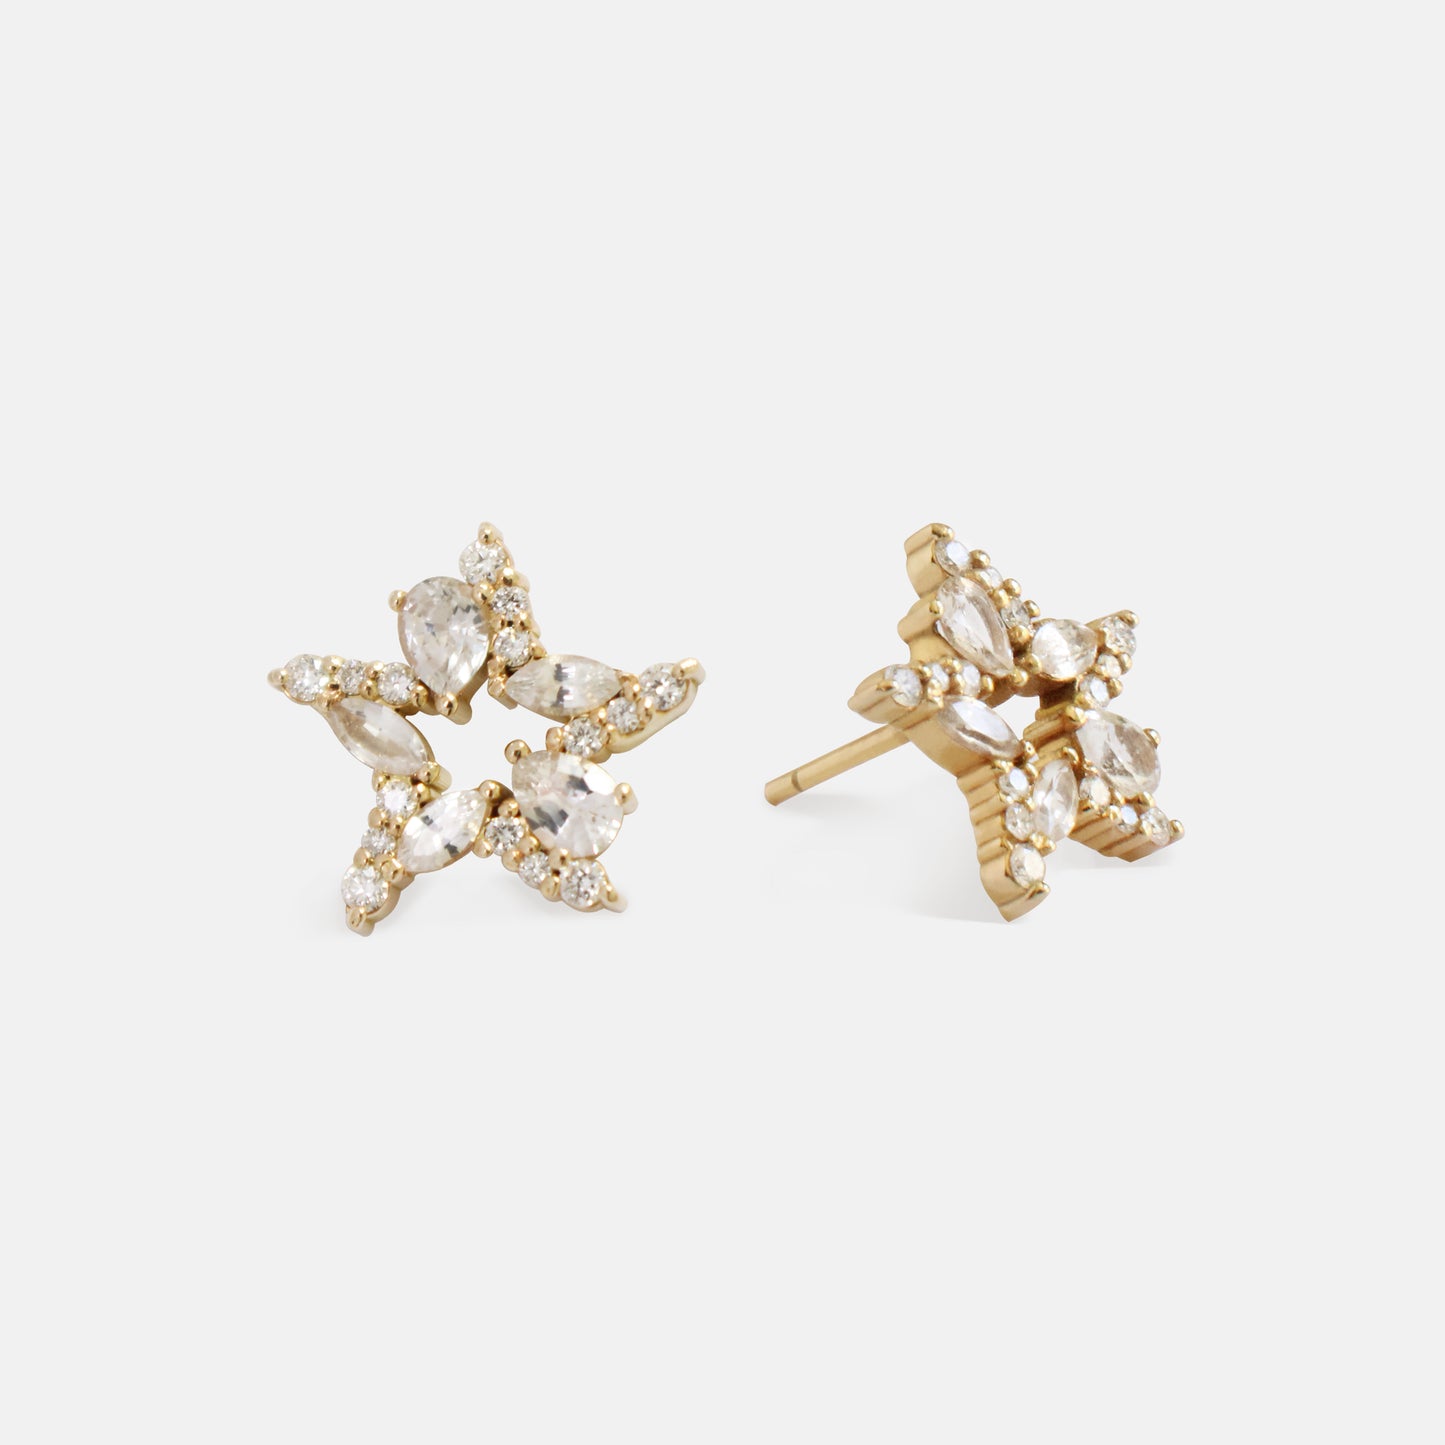 Wild Star Stud Earrings in Diamonds & White Sapphires